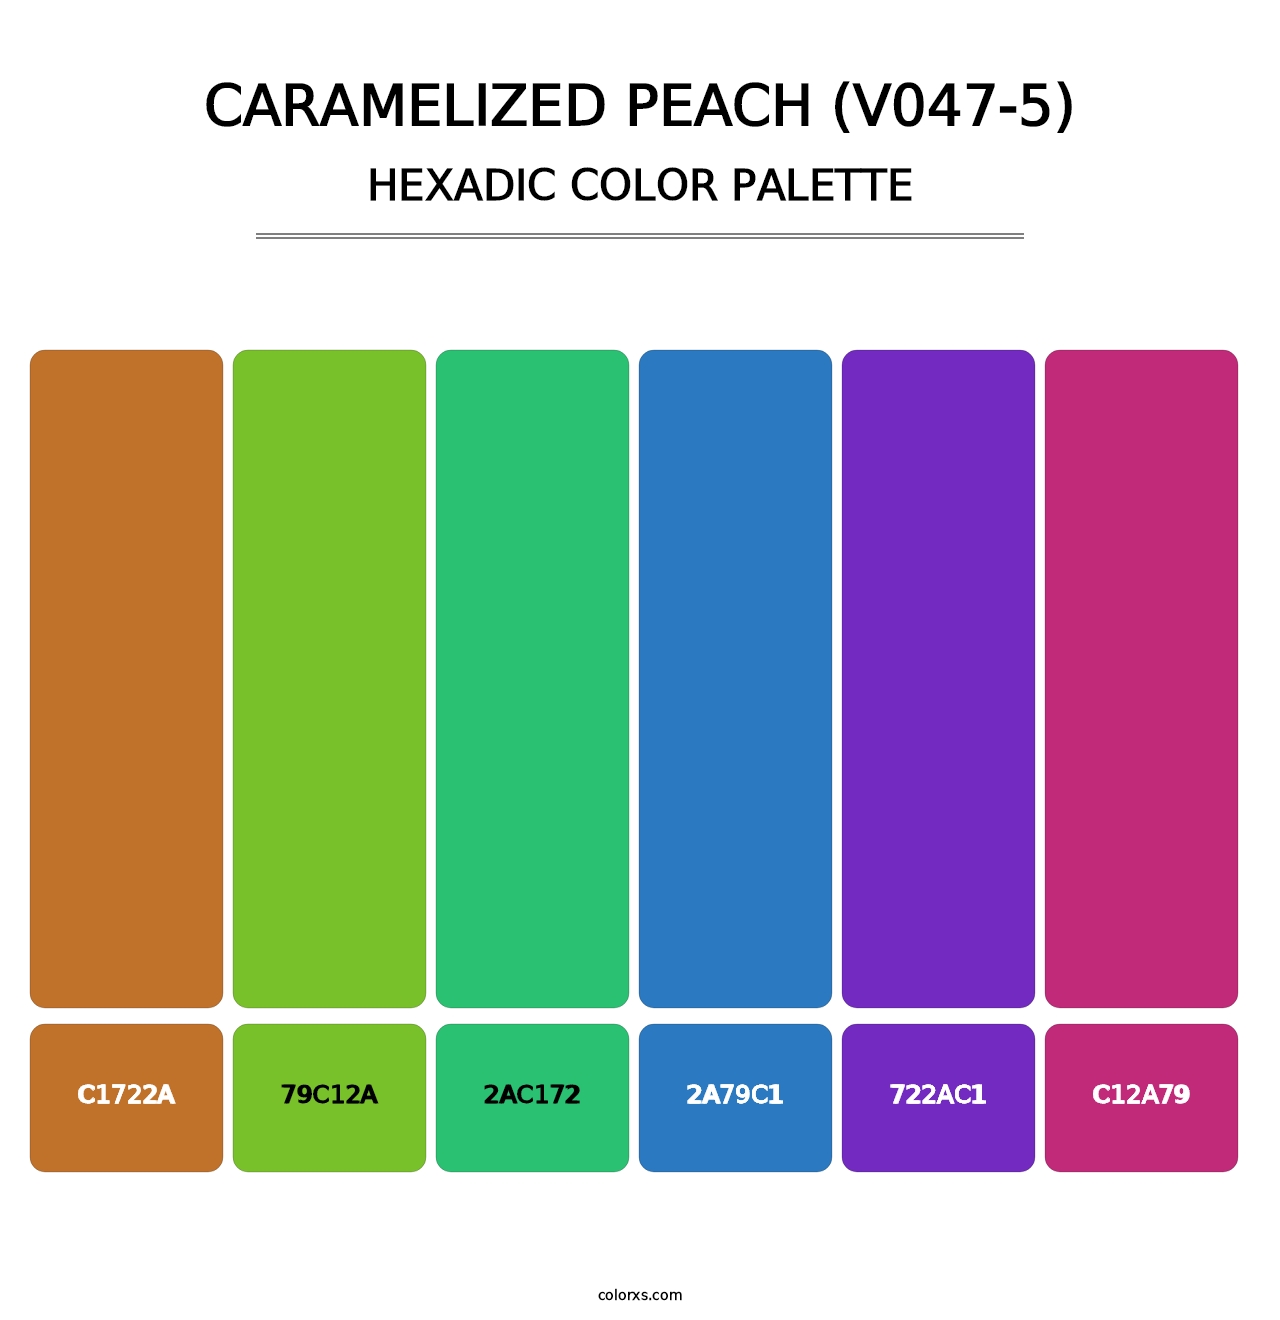 Caramelized Peach (V047-5) - Hexadic Color Palette